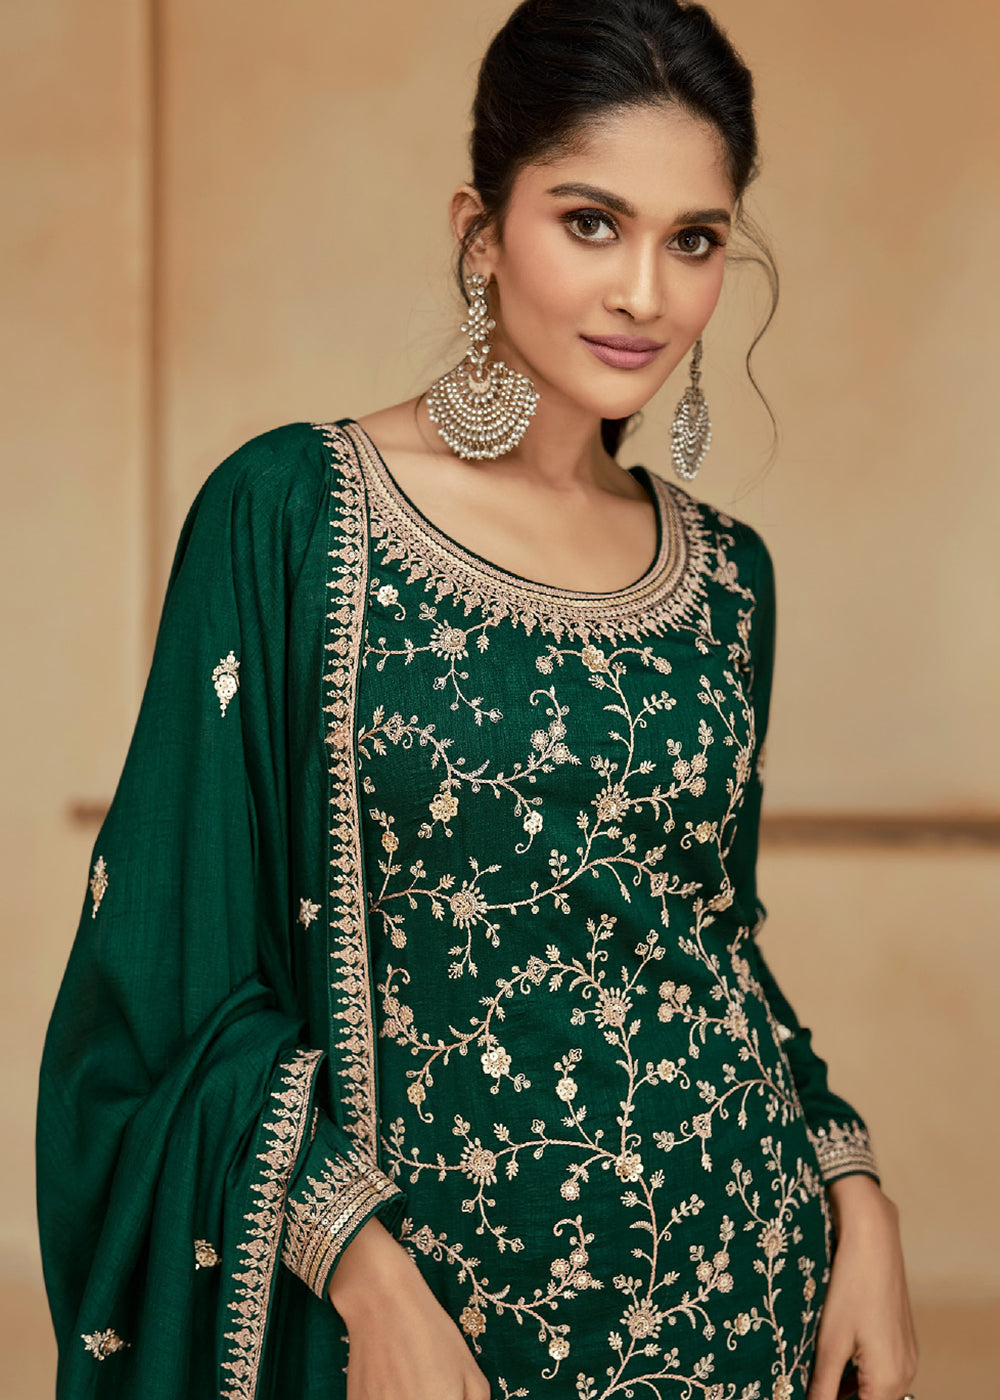 Buy Now Dark Green Zari & Sequins Work Palazzo Salwar Suit Online in USA, UK, Canada, Germany, Australia & Worldwide at Empress Clothing.